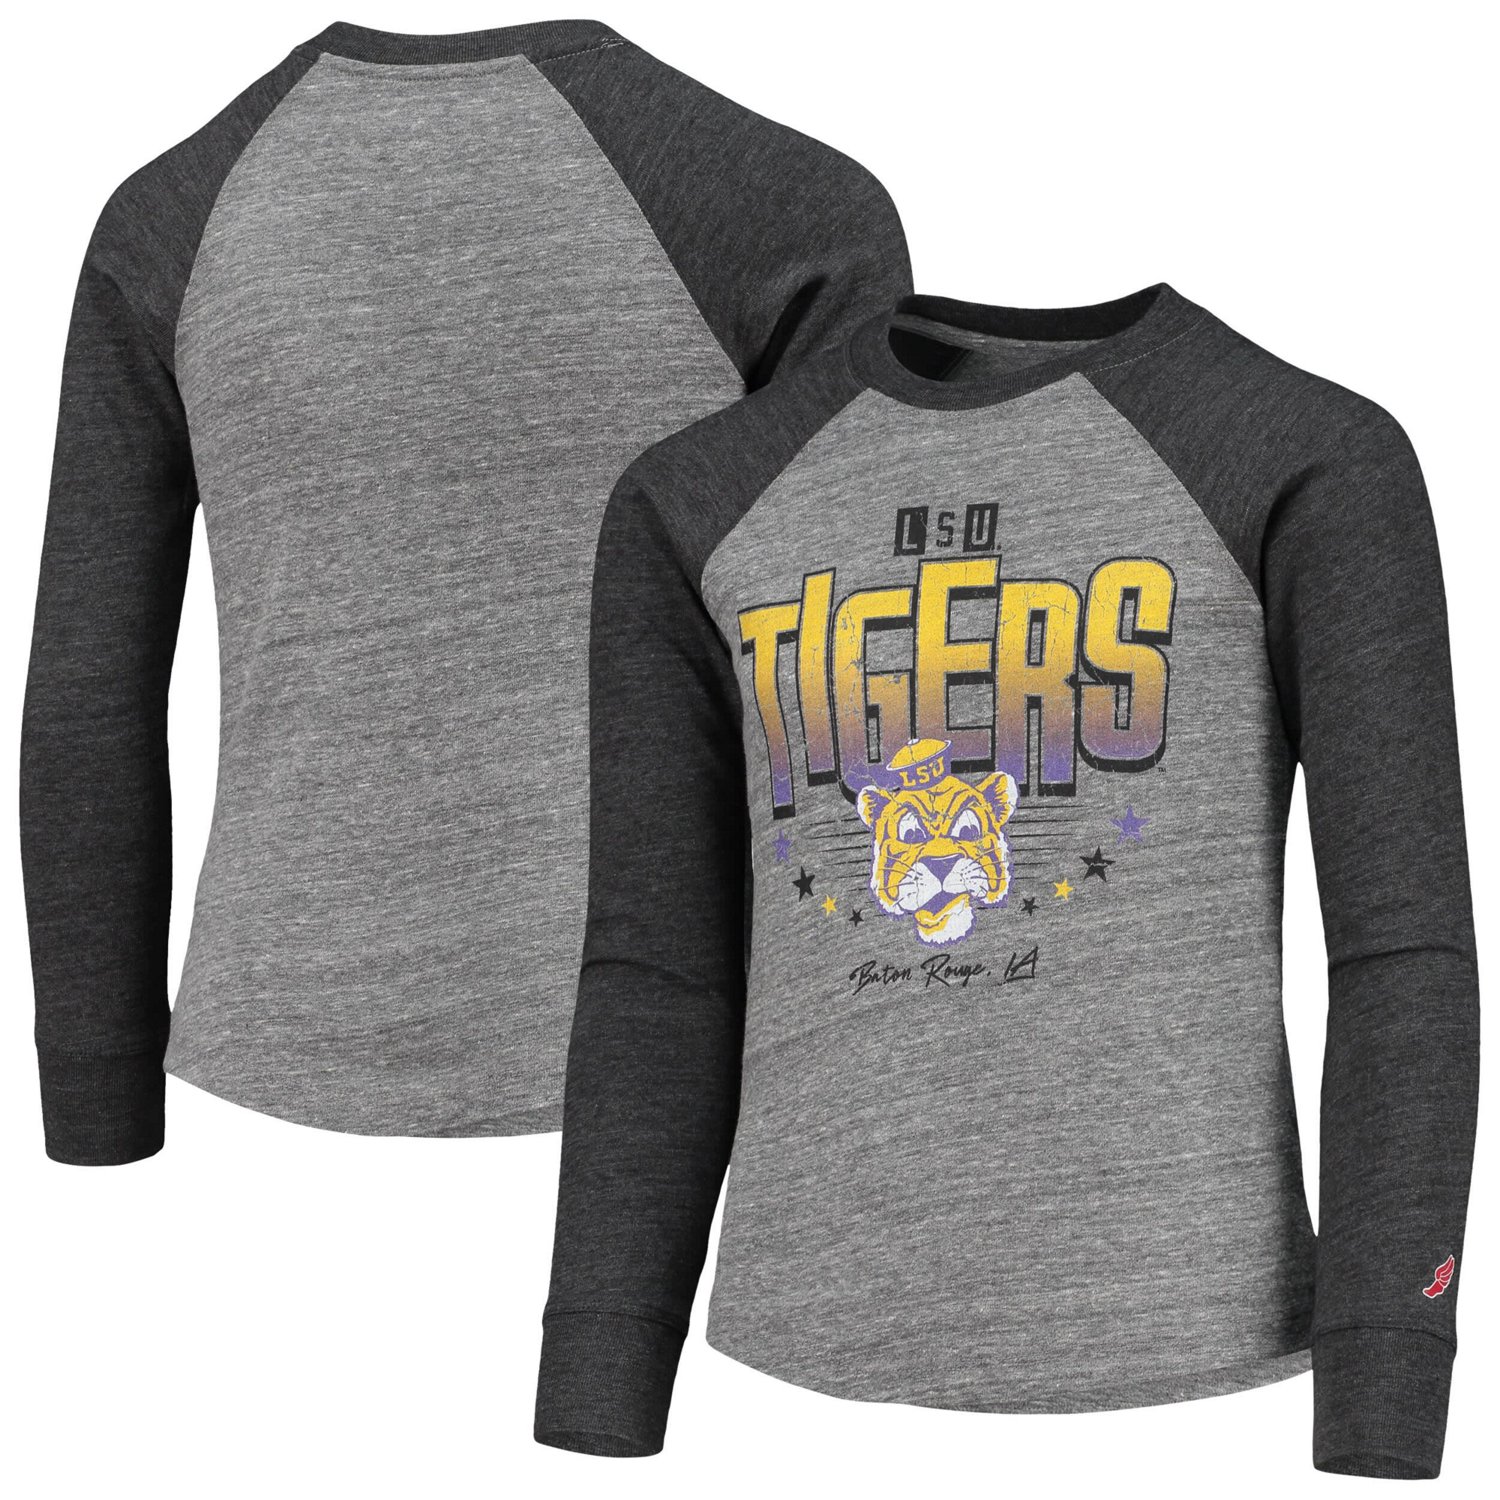 Youth League Collegiate Wear Heathered Gray Lsu Tigers Baseball Tri Blend Raglan Long Sleeve T 